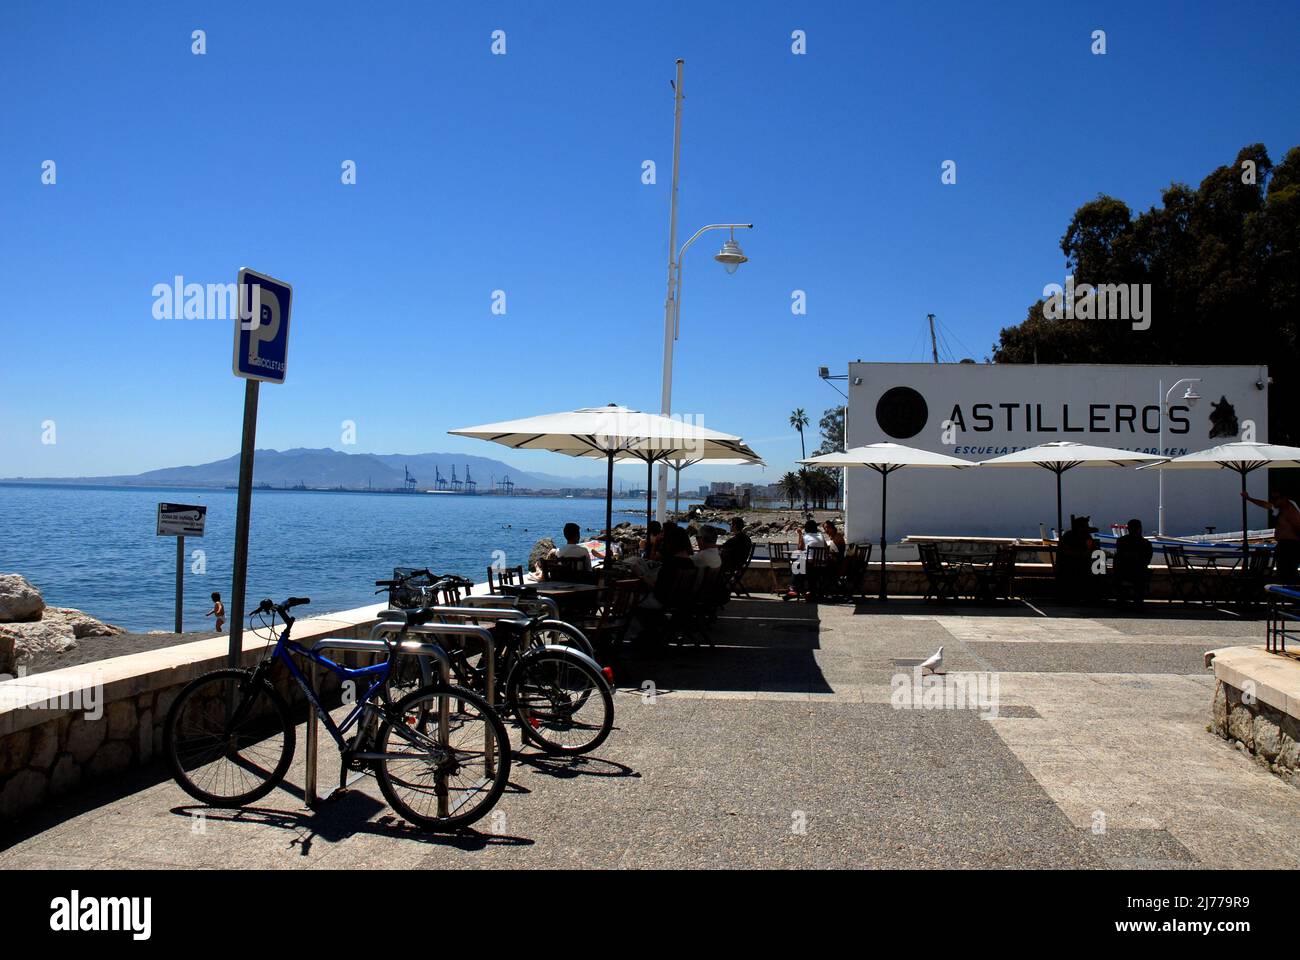 Pedregalejo, Malaga . foto: © Rosmi Duaso/fototext,BCN. Stockfoto